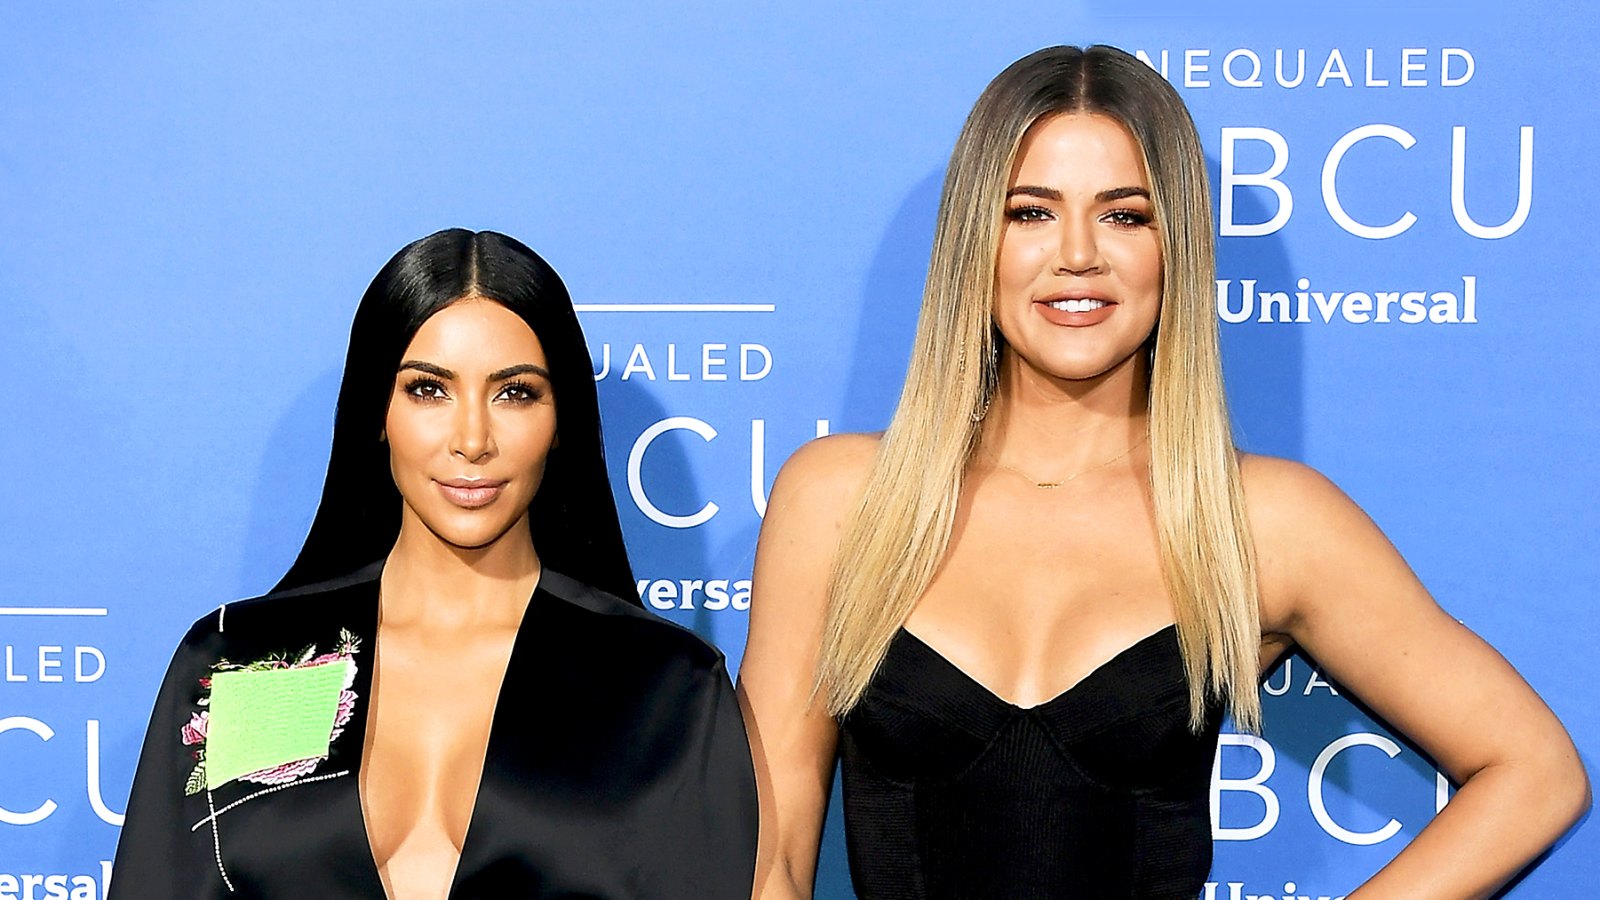 Kim Kardashian and Khloe Kardashian attend the 2017 NBCUniversal Upfront at Radio City Music Hall in New York City.